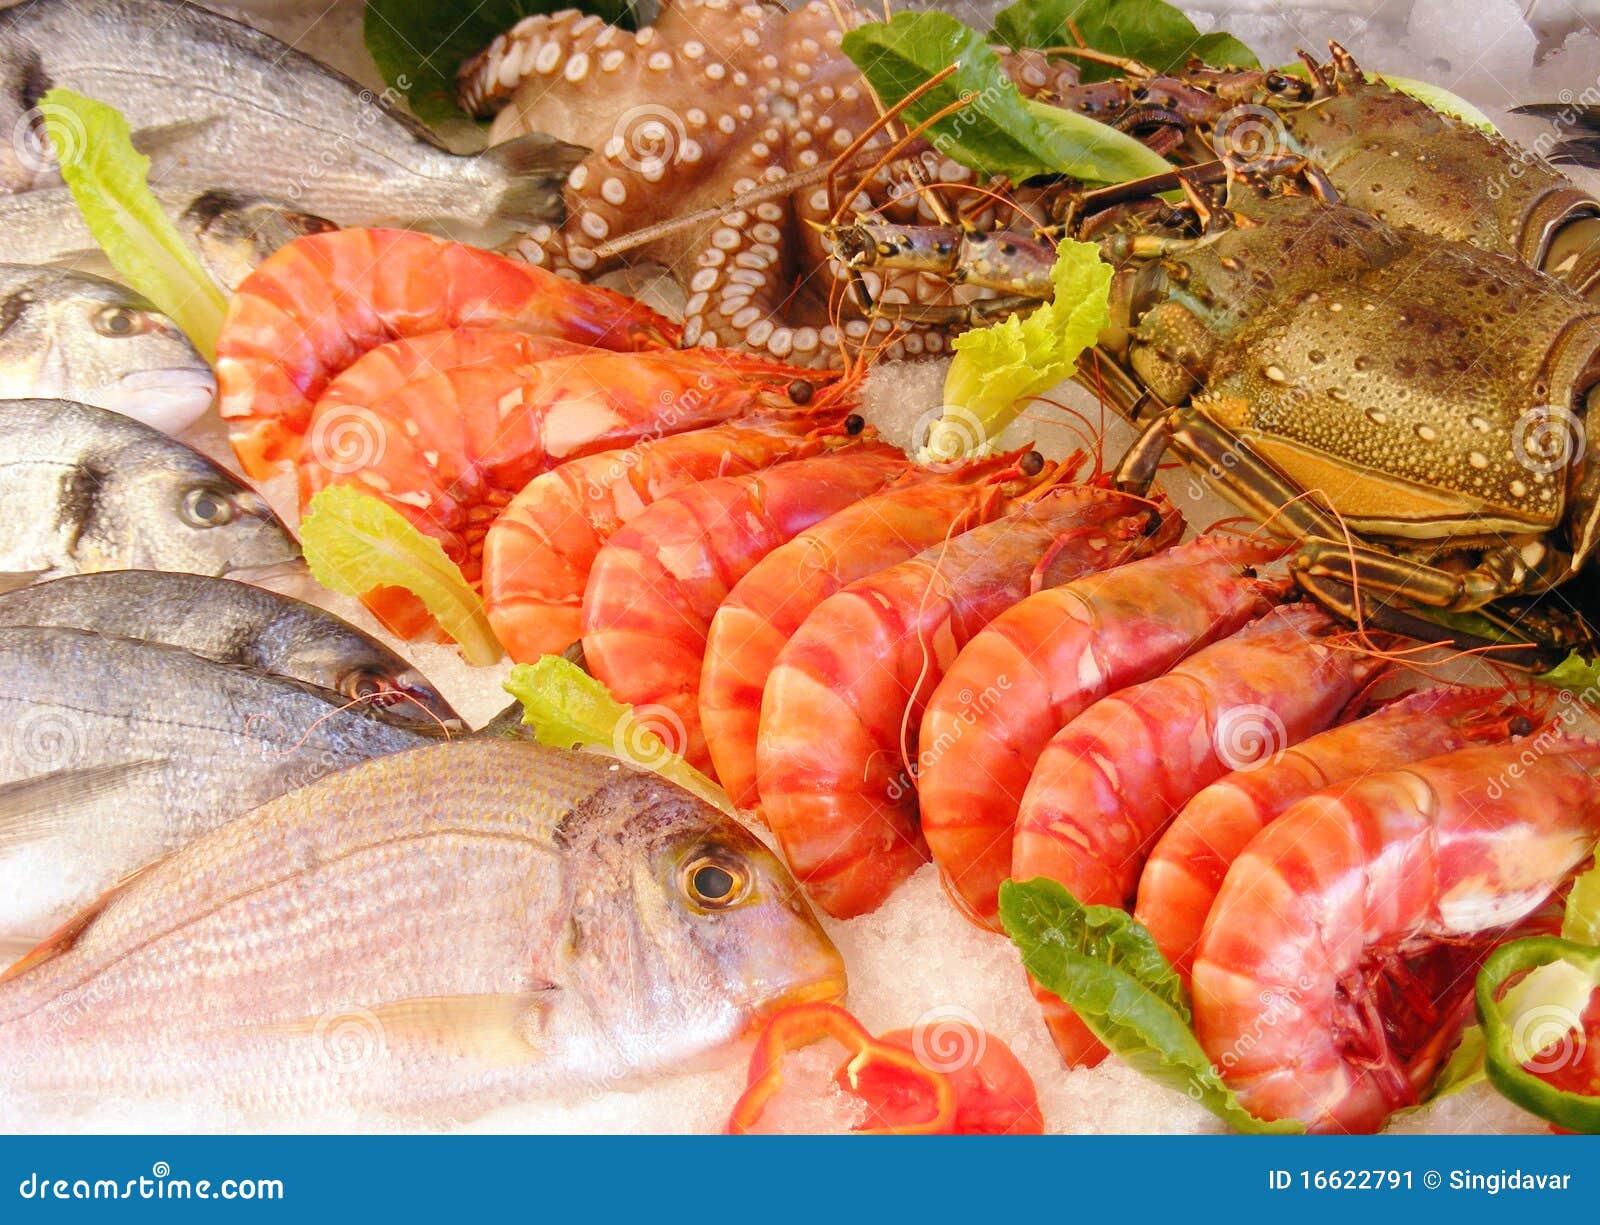 Fresh seafood stock image. Image of seafood, restaurant - 16622791